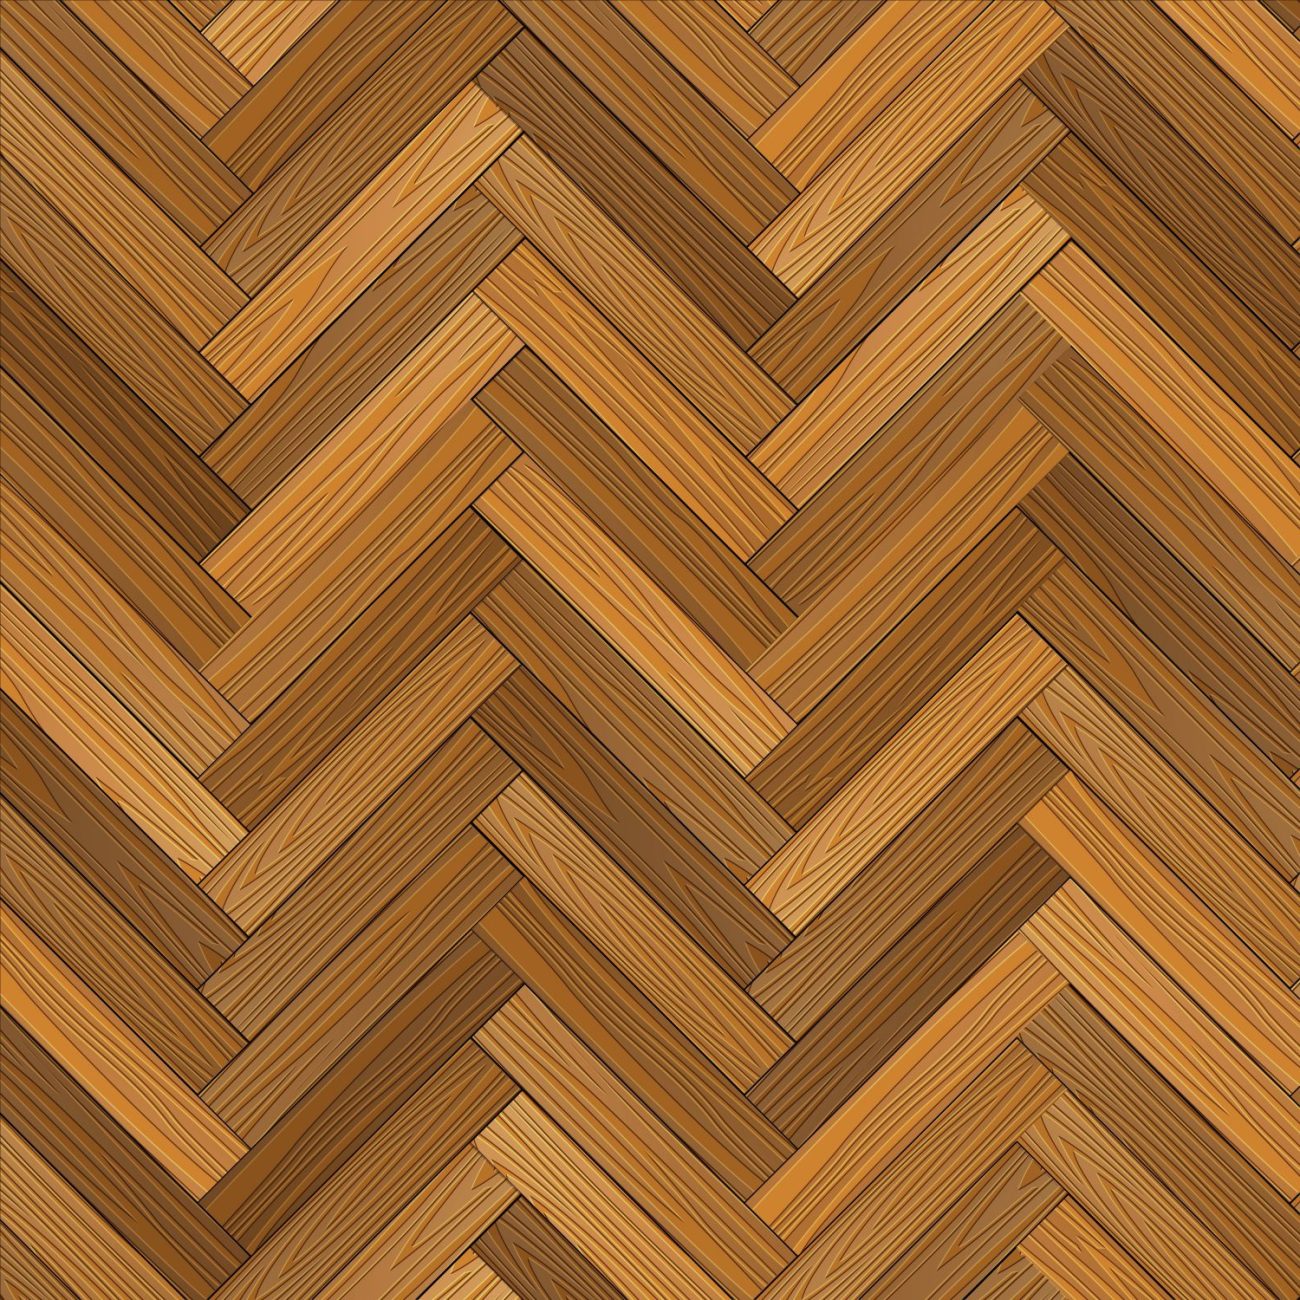 Hardwood Flooring Patterns, Hardwood Floor Installation Patterns